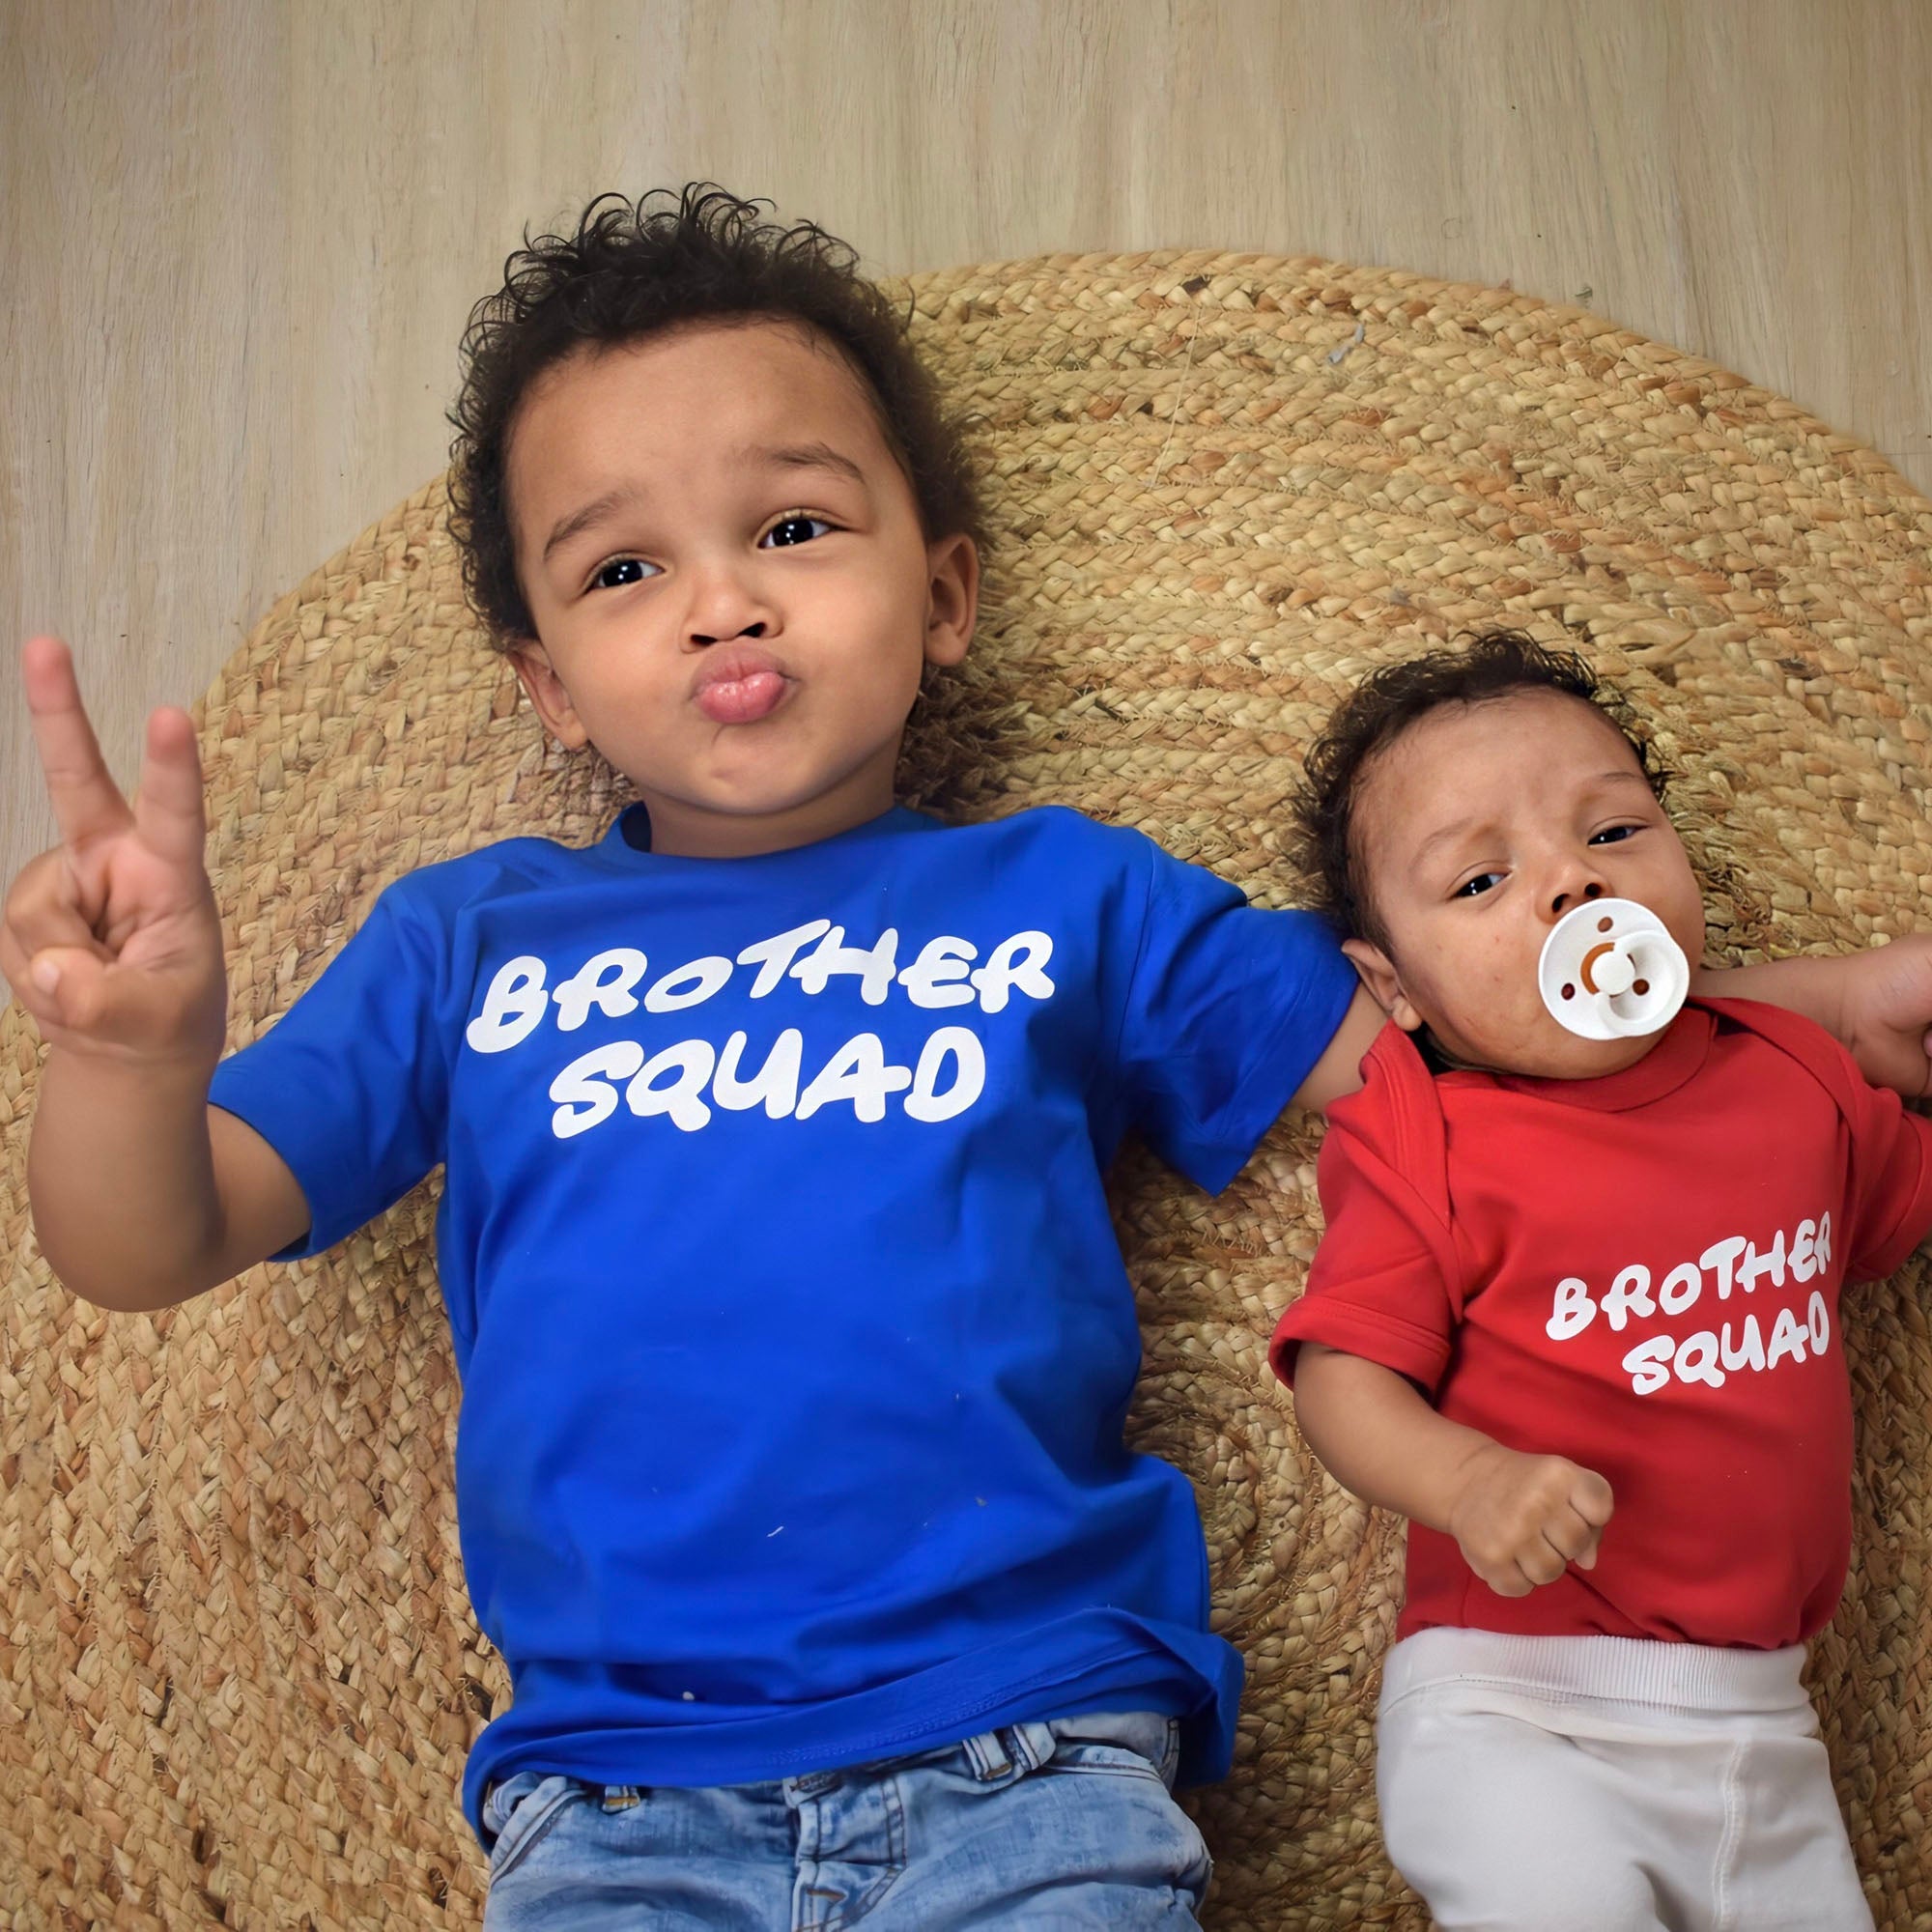 'Brother squad' kids shortsleeve shirt